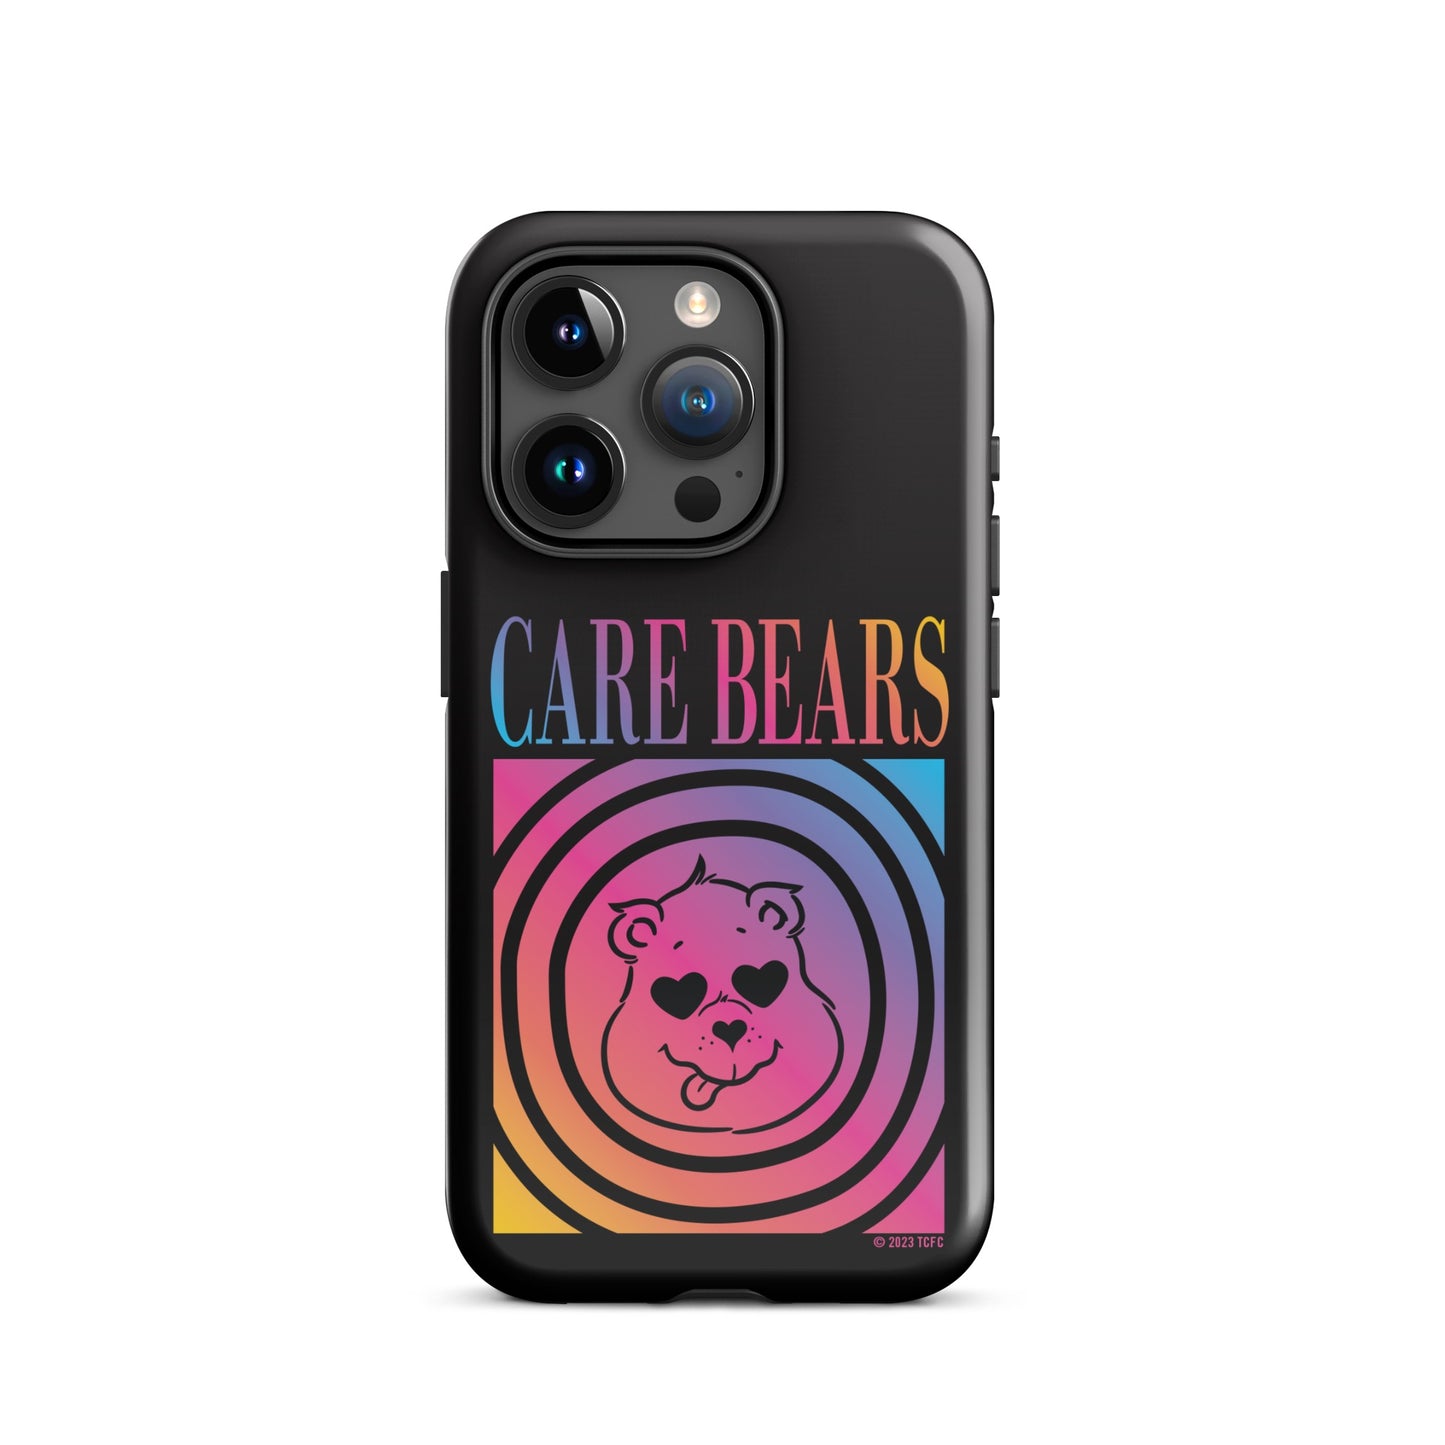 Care Bears Punk Tough Phone Case - iPhone